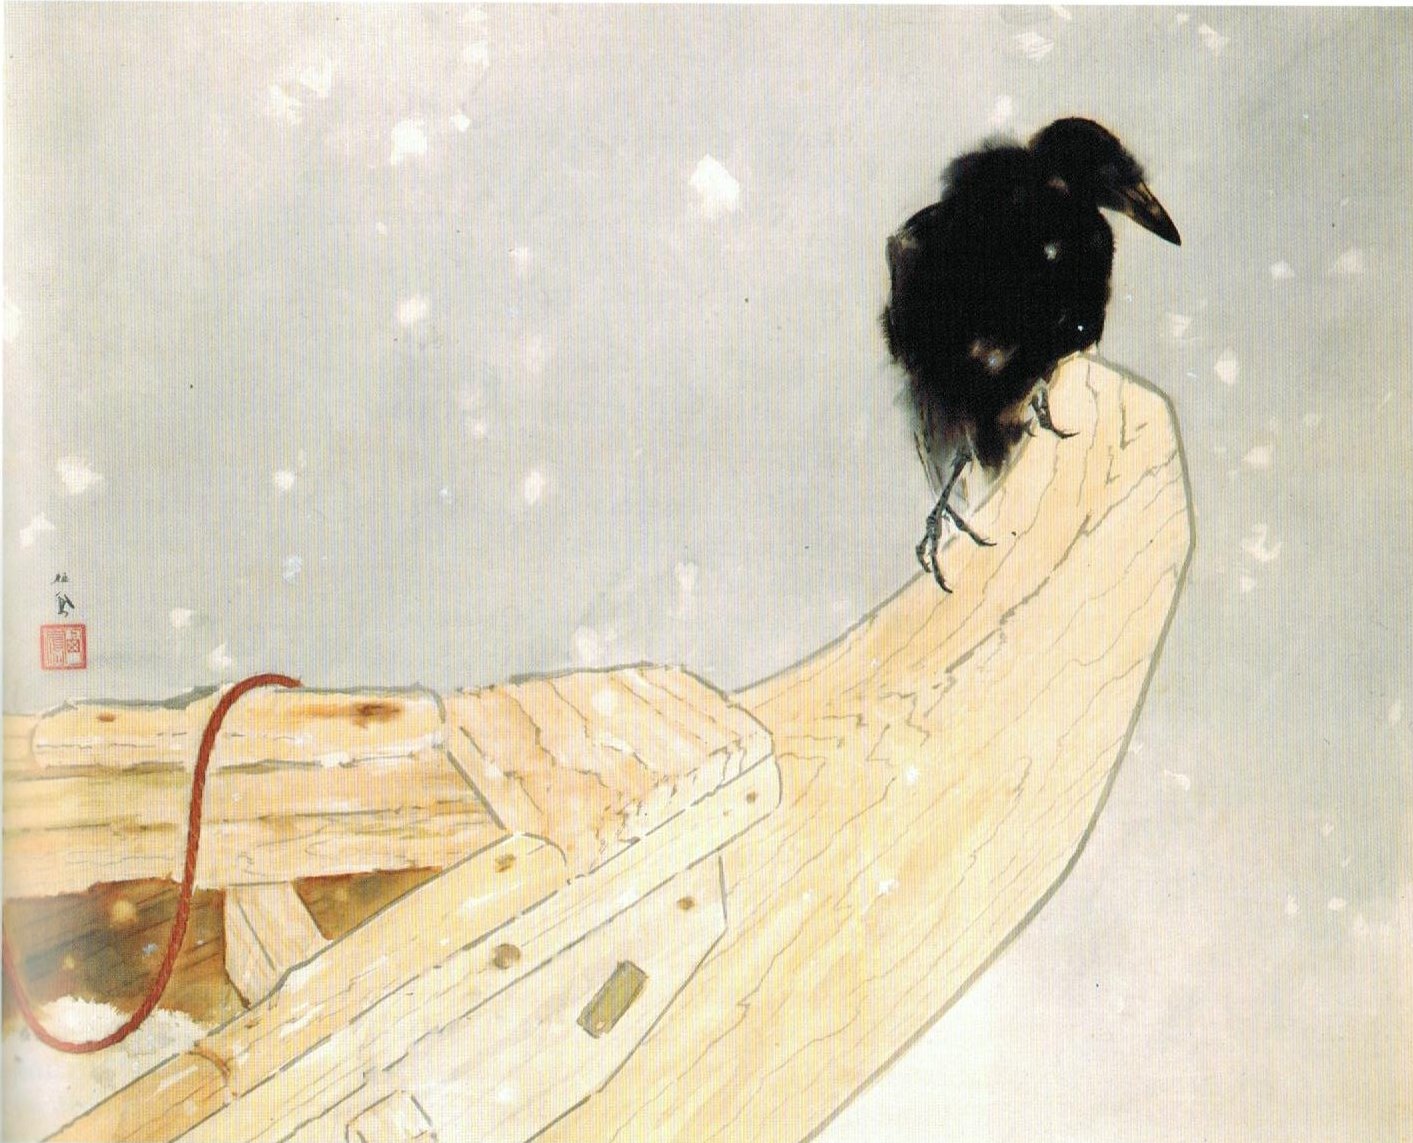 Neve di primavera (Shunsetsu) by Takeuchi Seihō - 1942 - 74.3 x 90.9 cm 